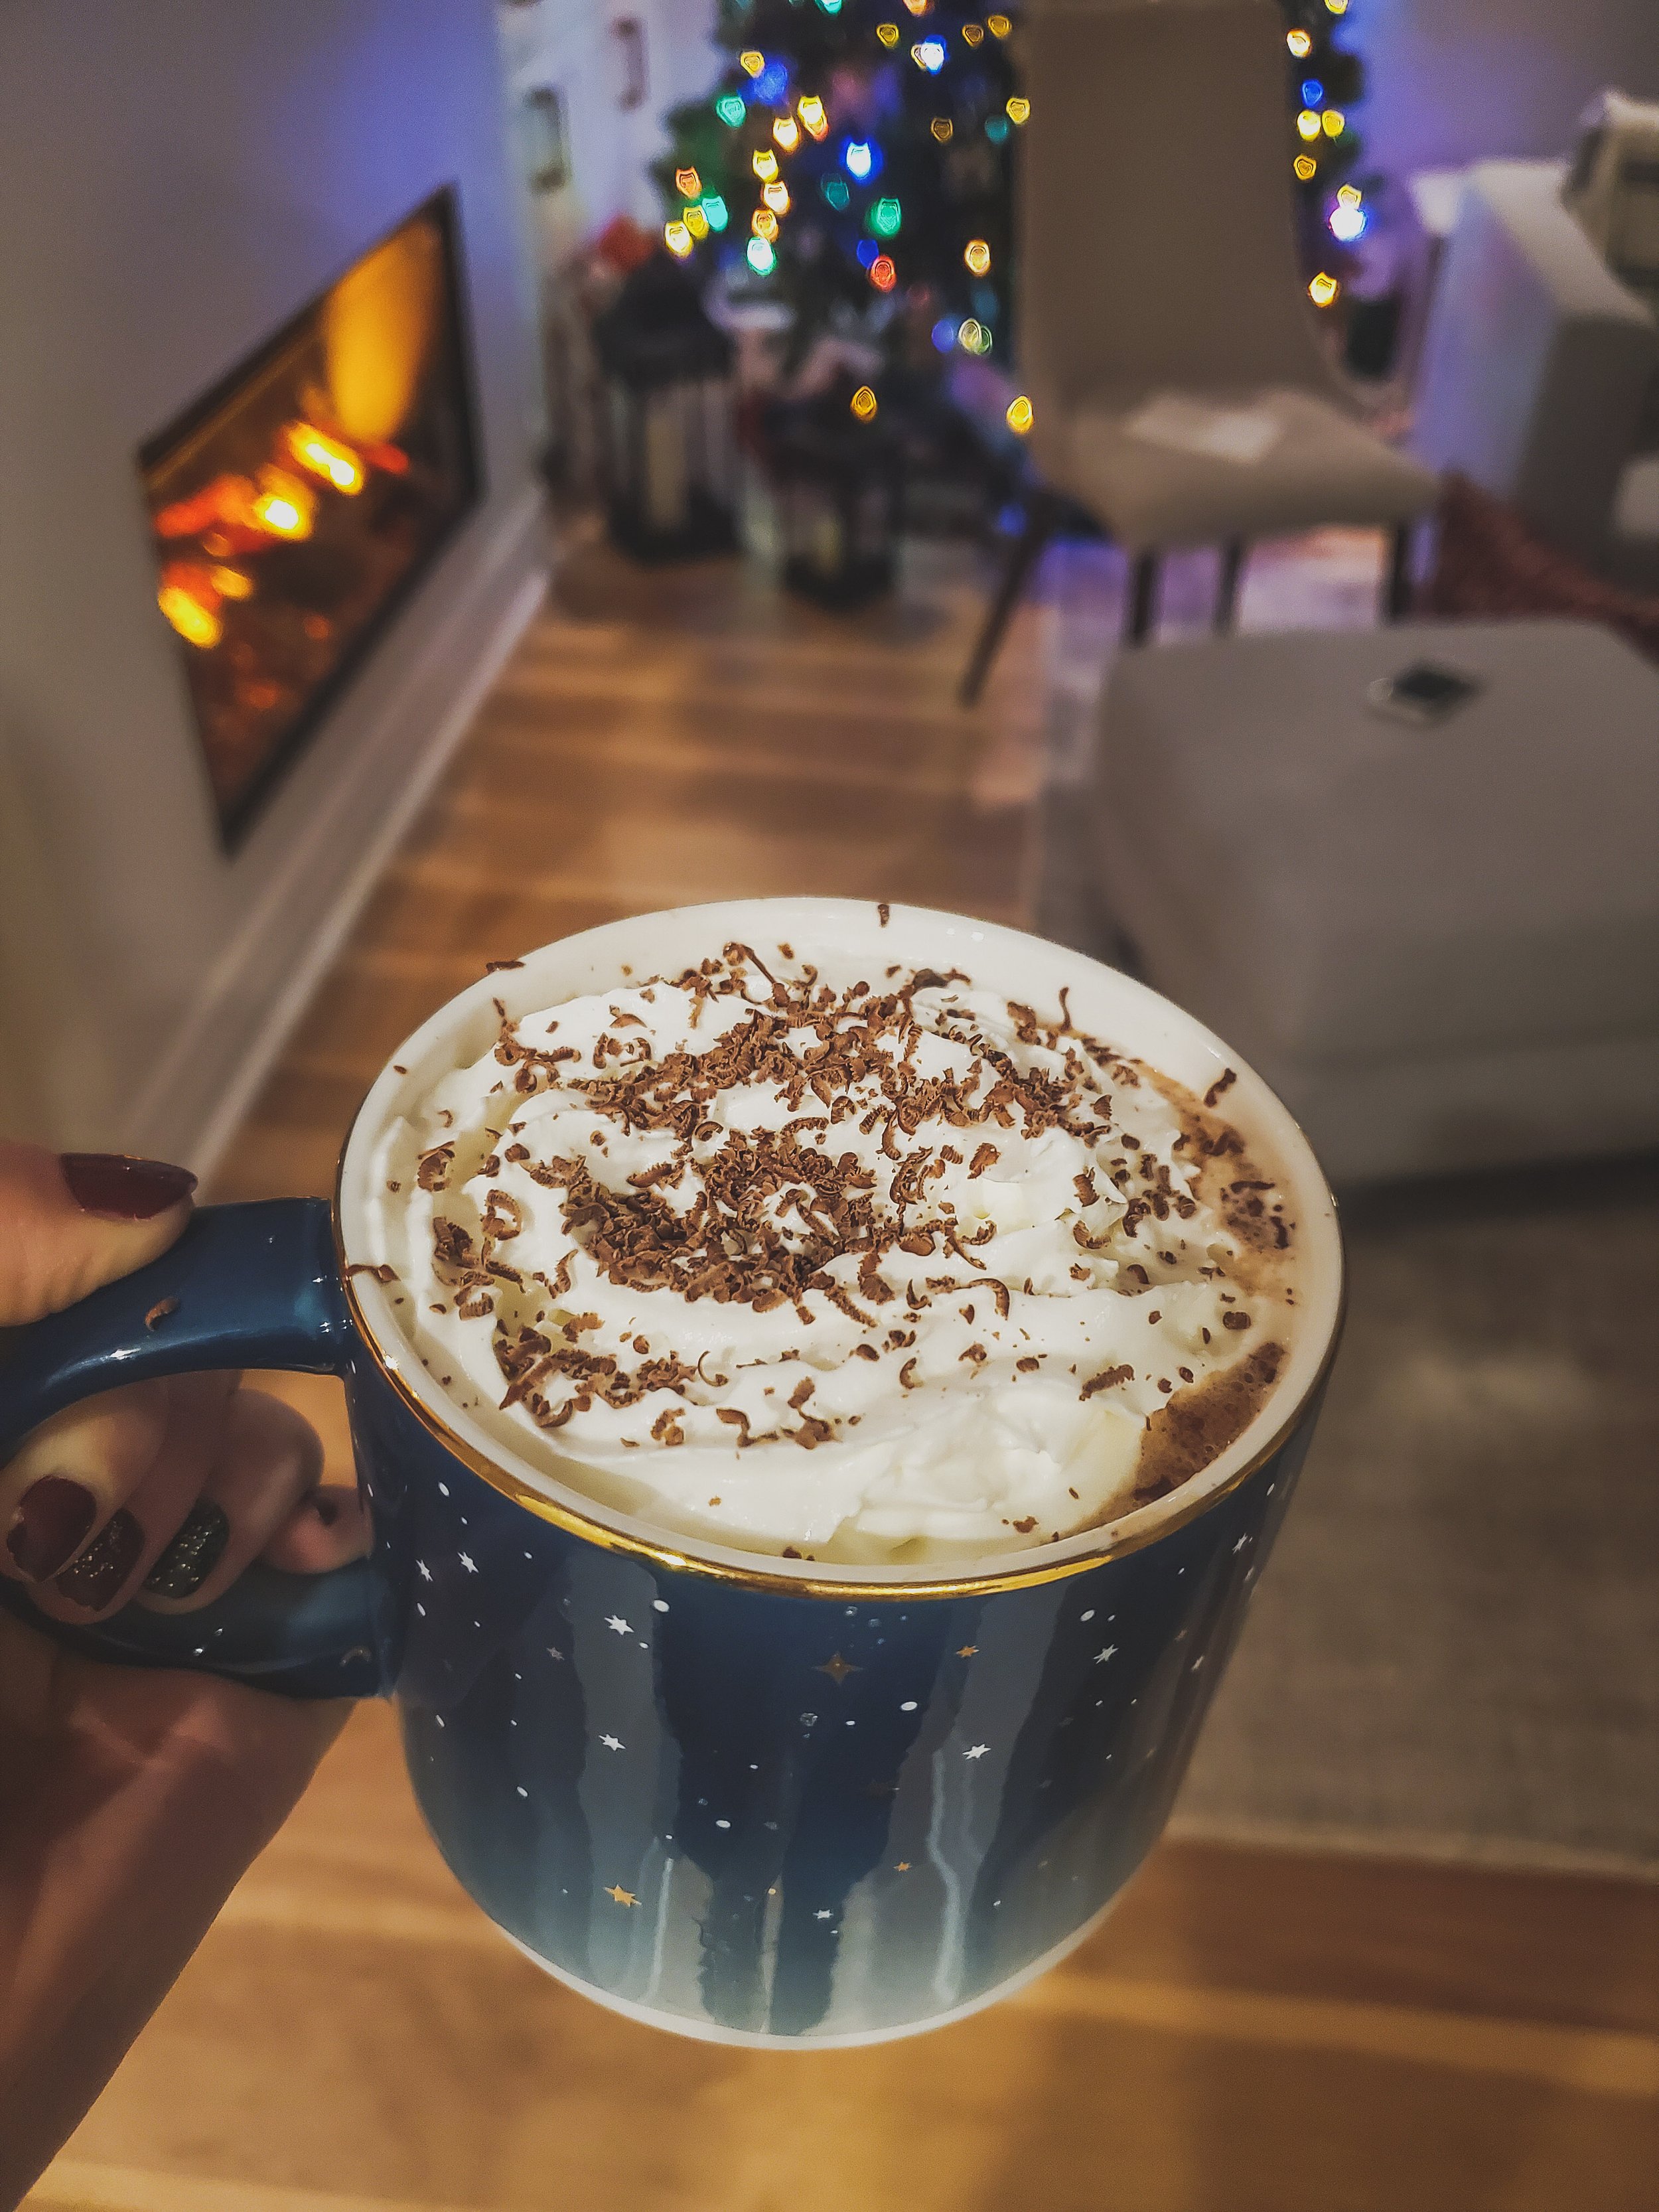  Ultimate hot chocolate! 